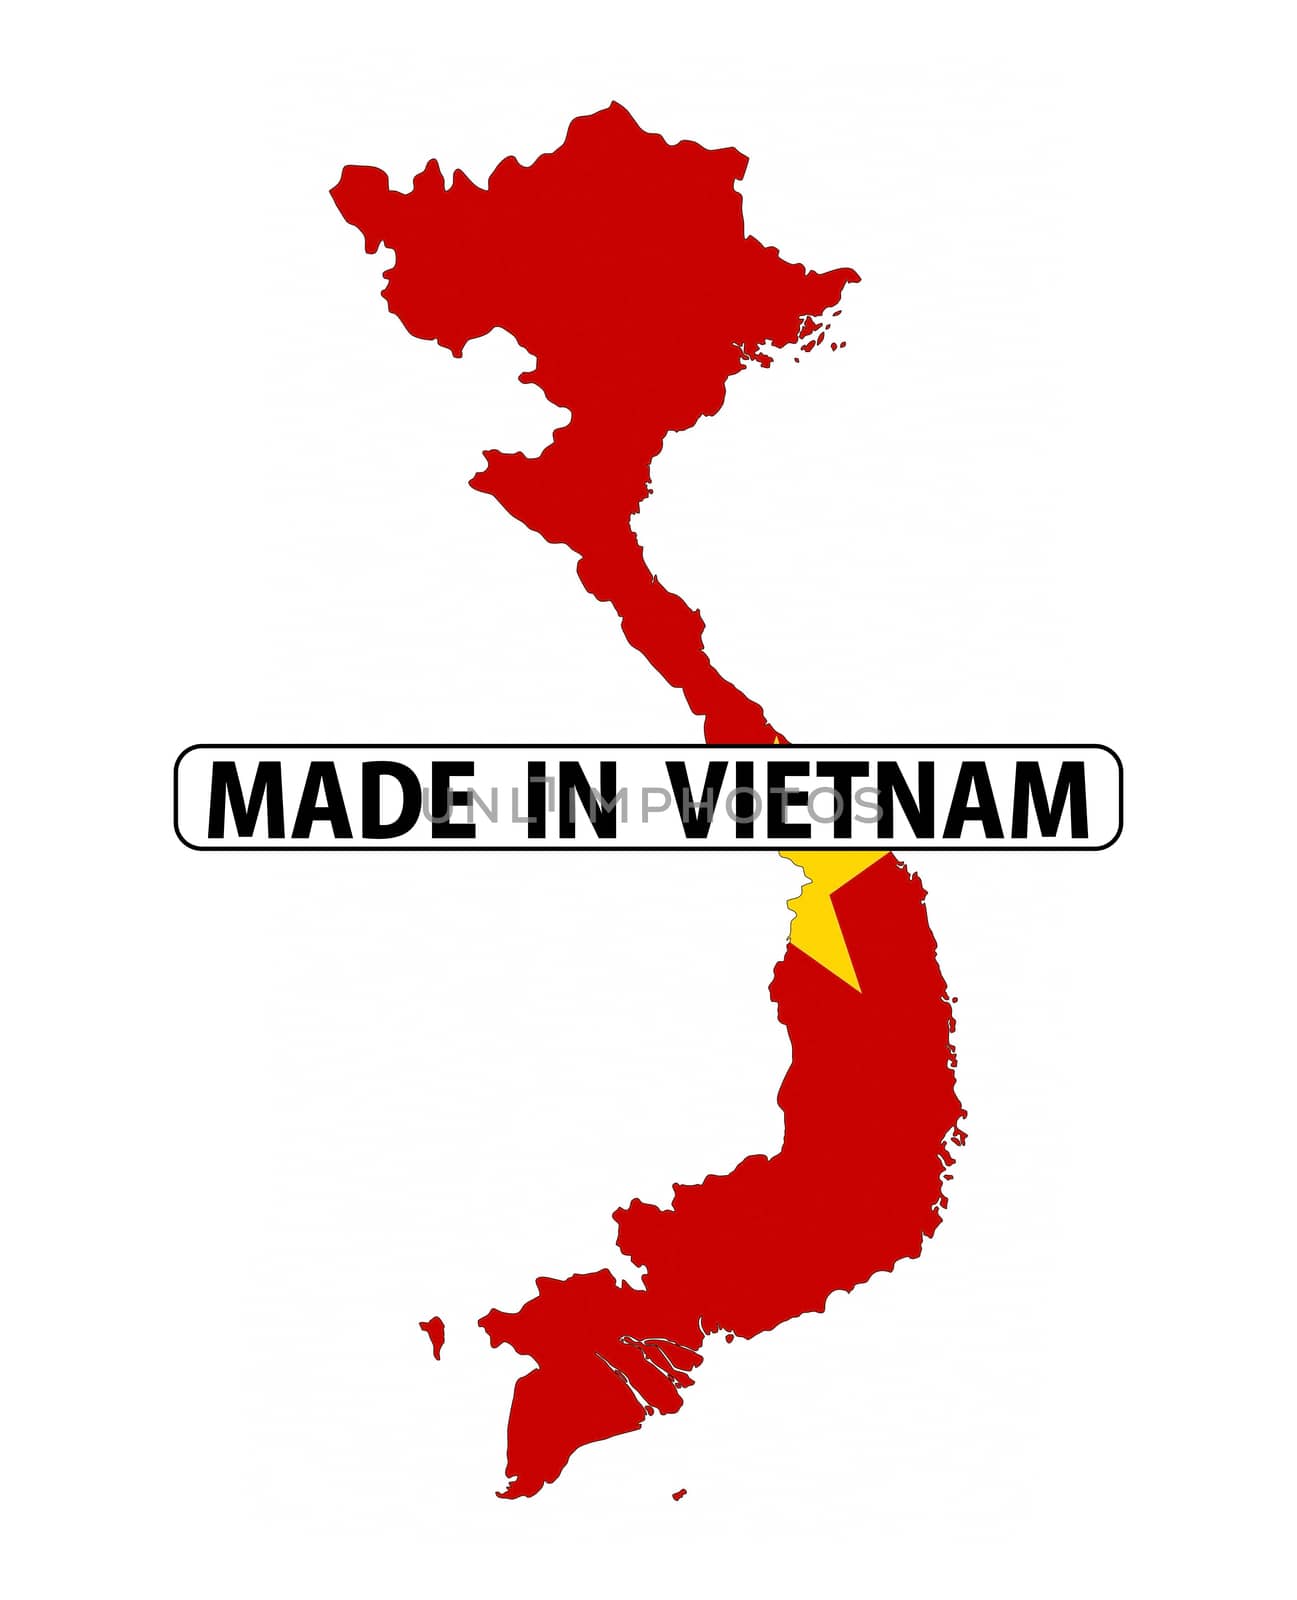 made in vietnam by tony4urban